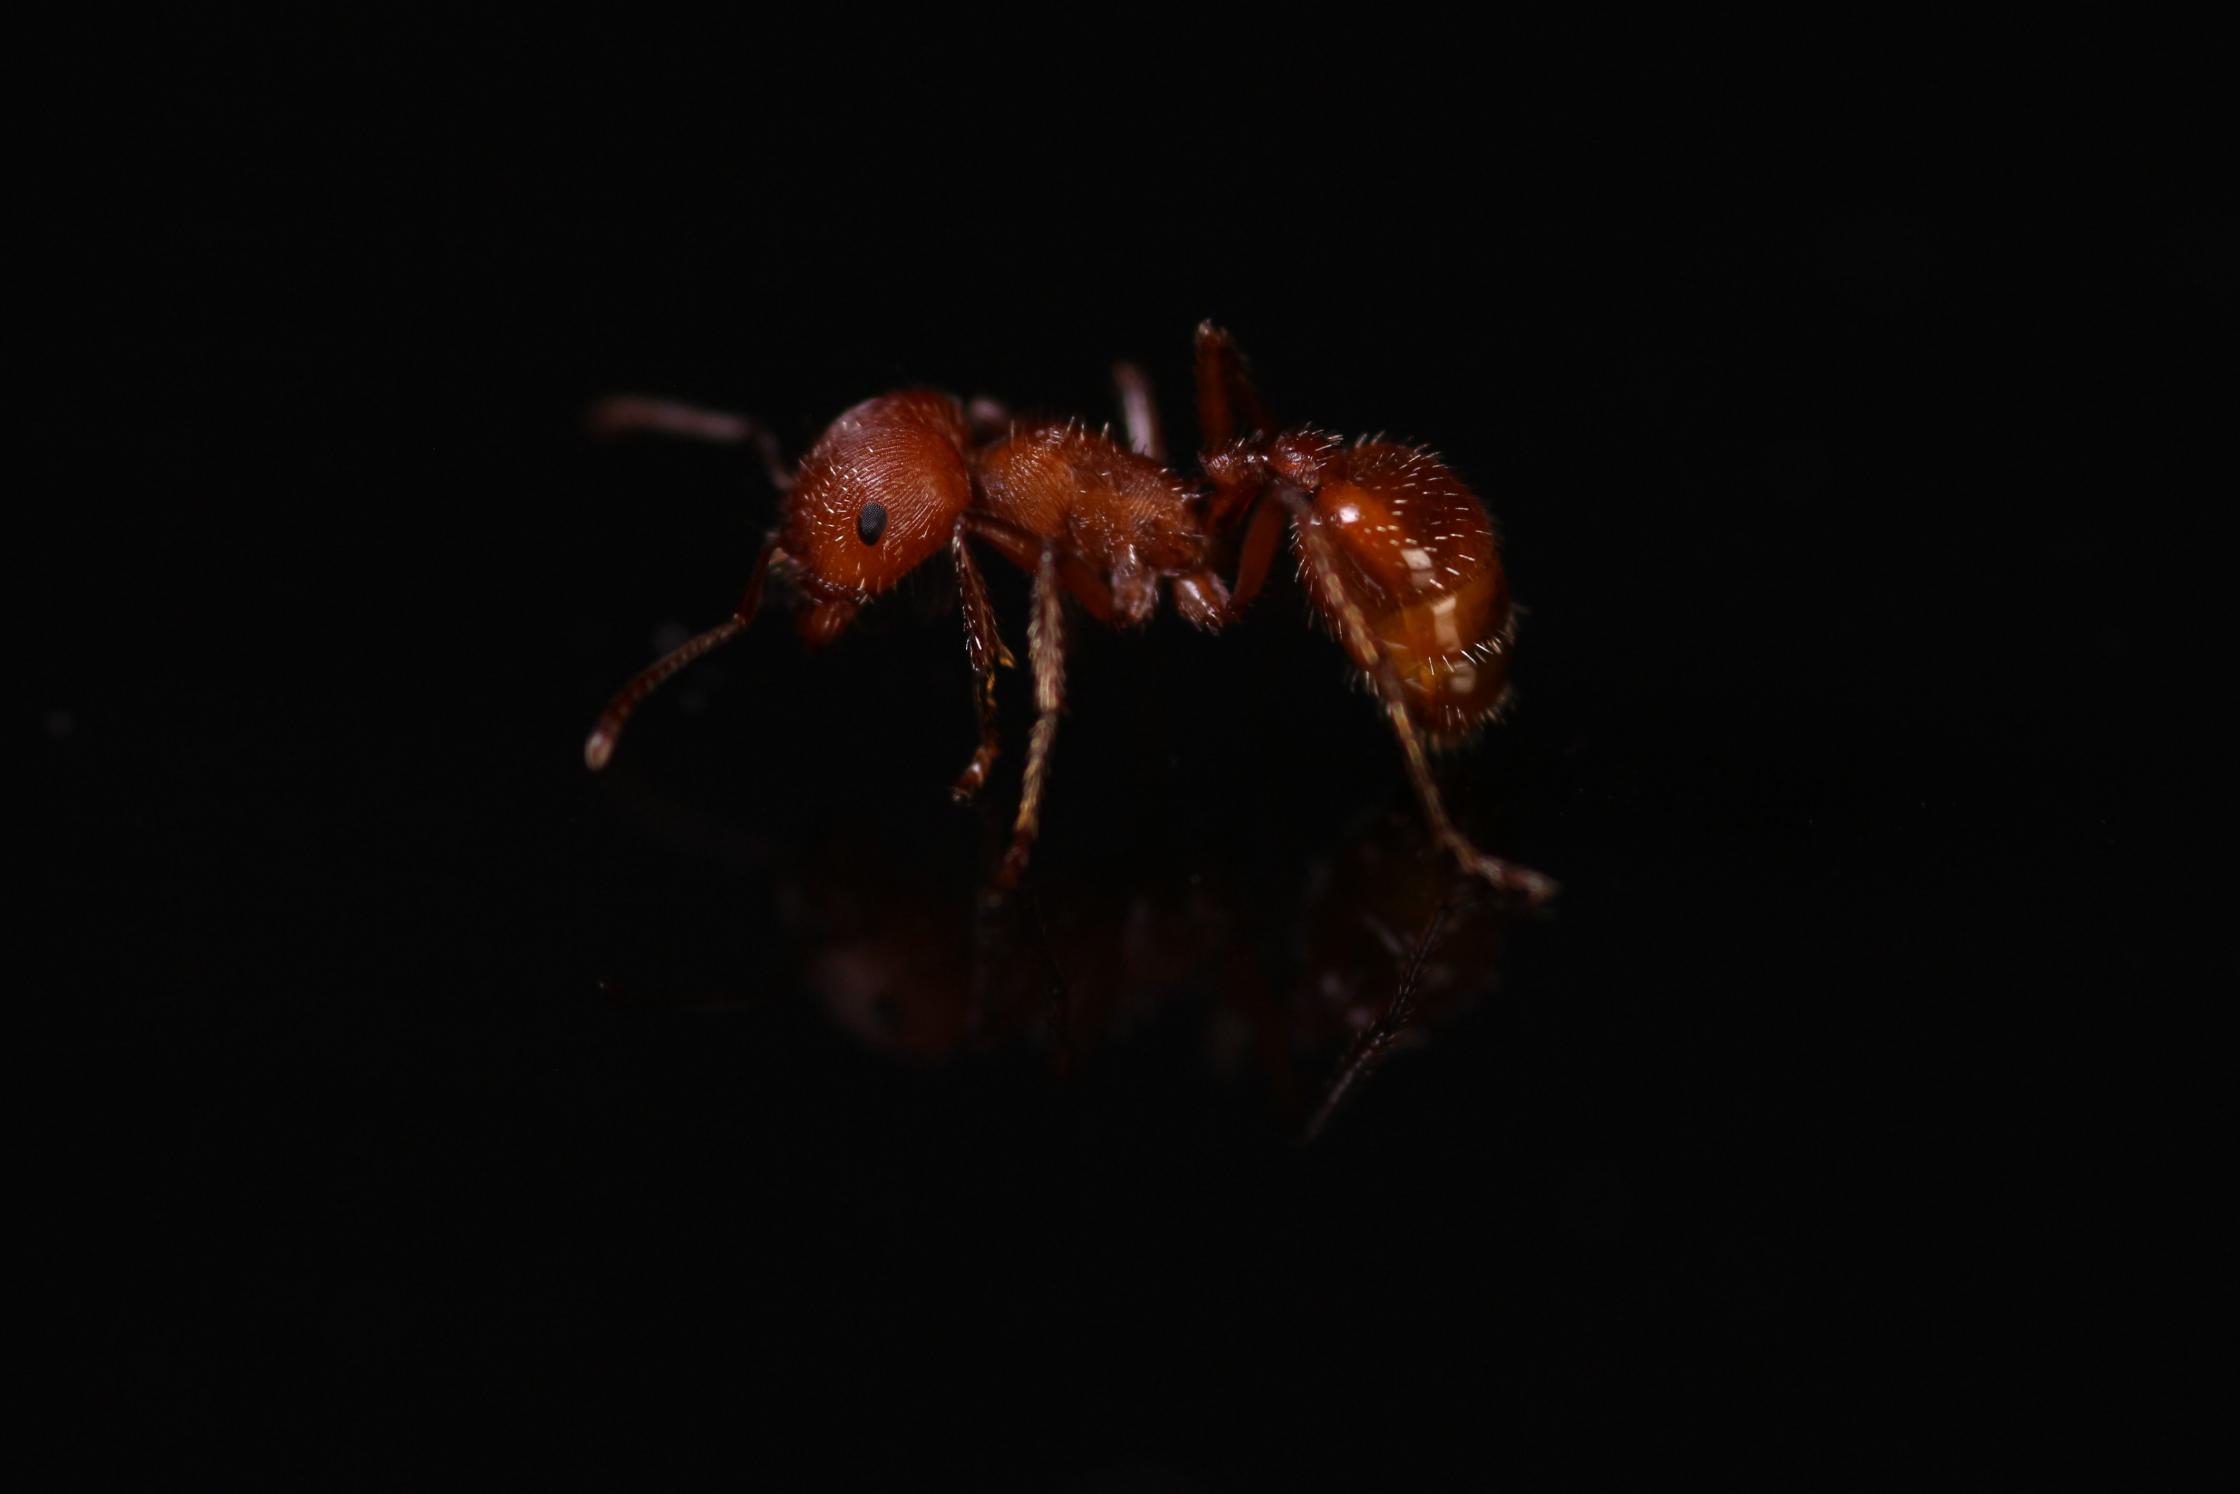 Ants4fun's Photo